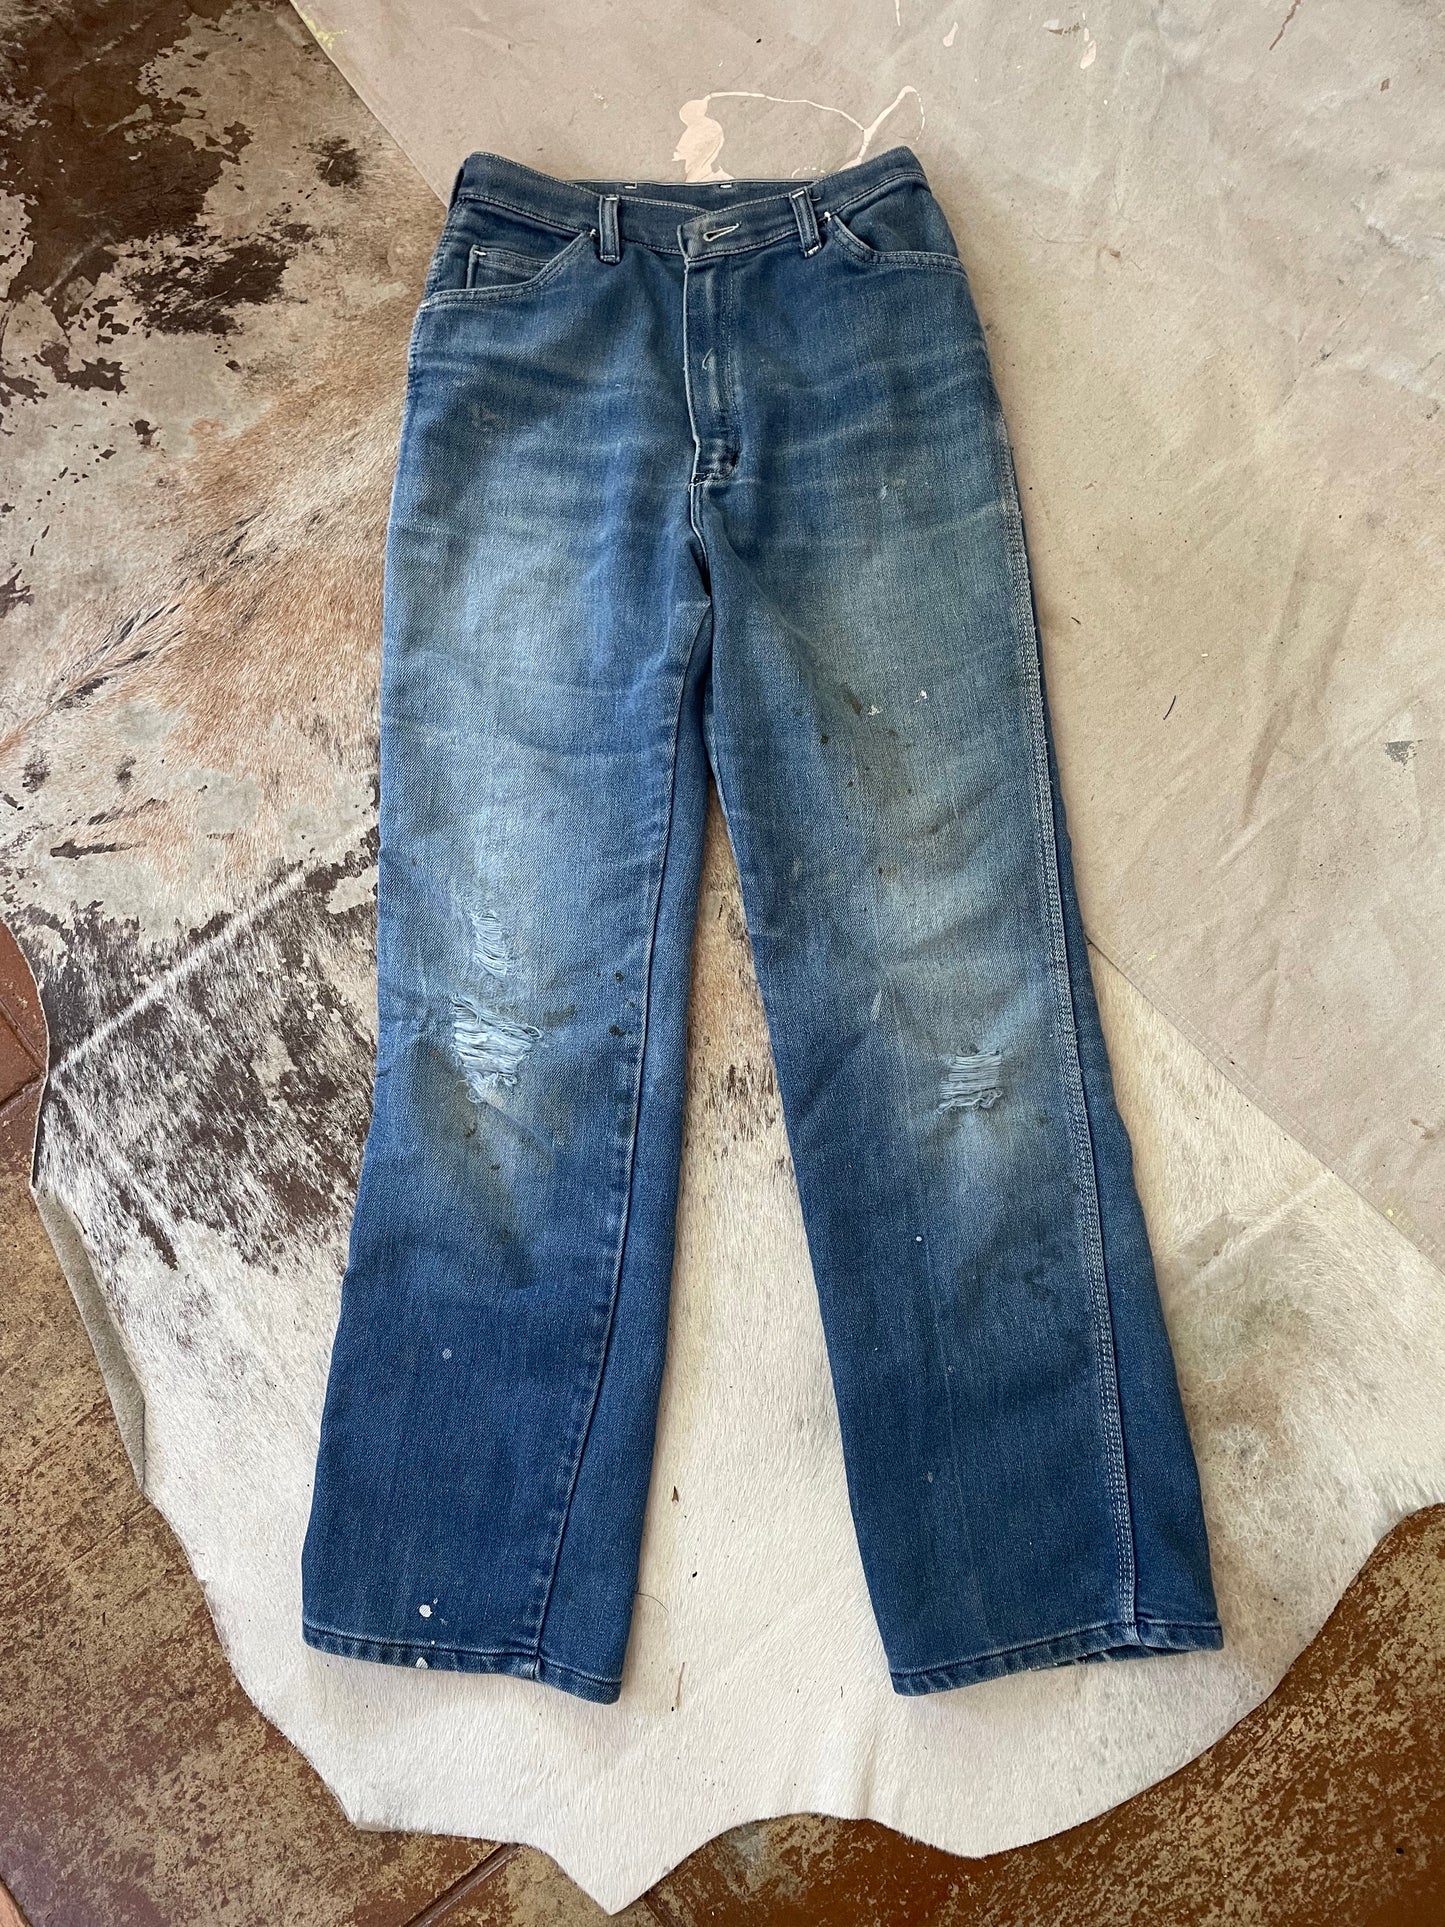 80s Distressed Wrangler Jeans